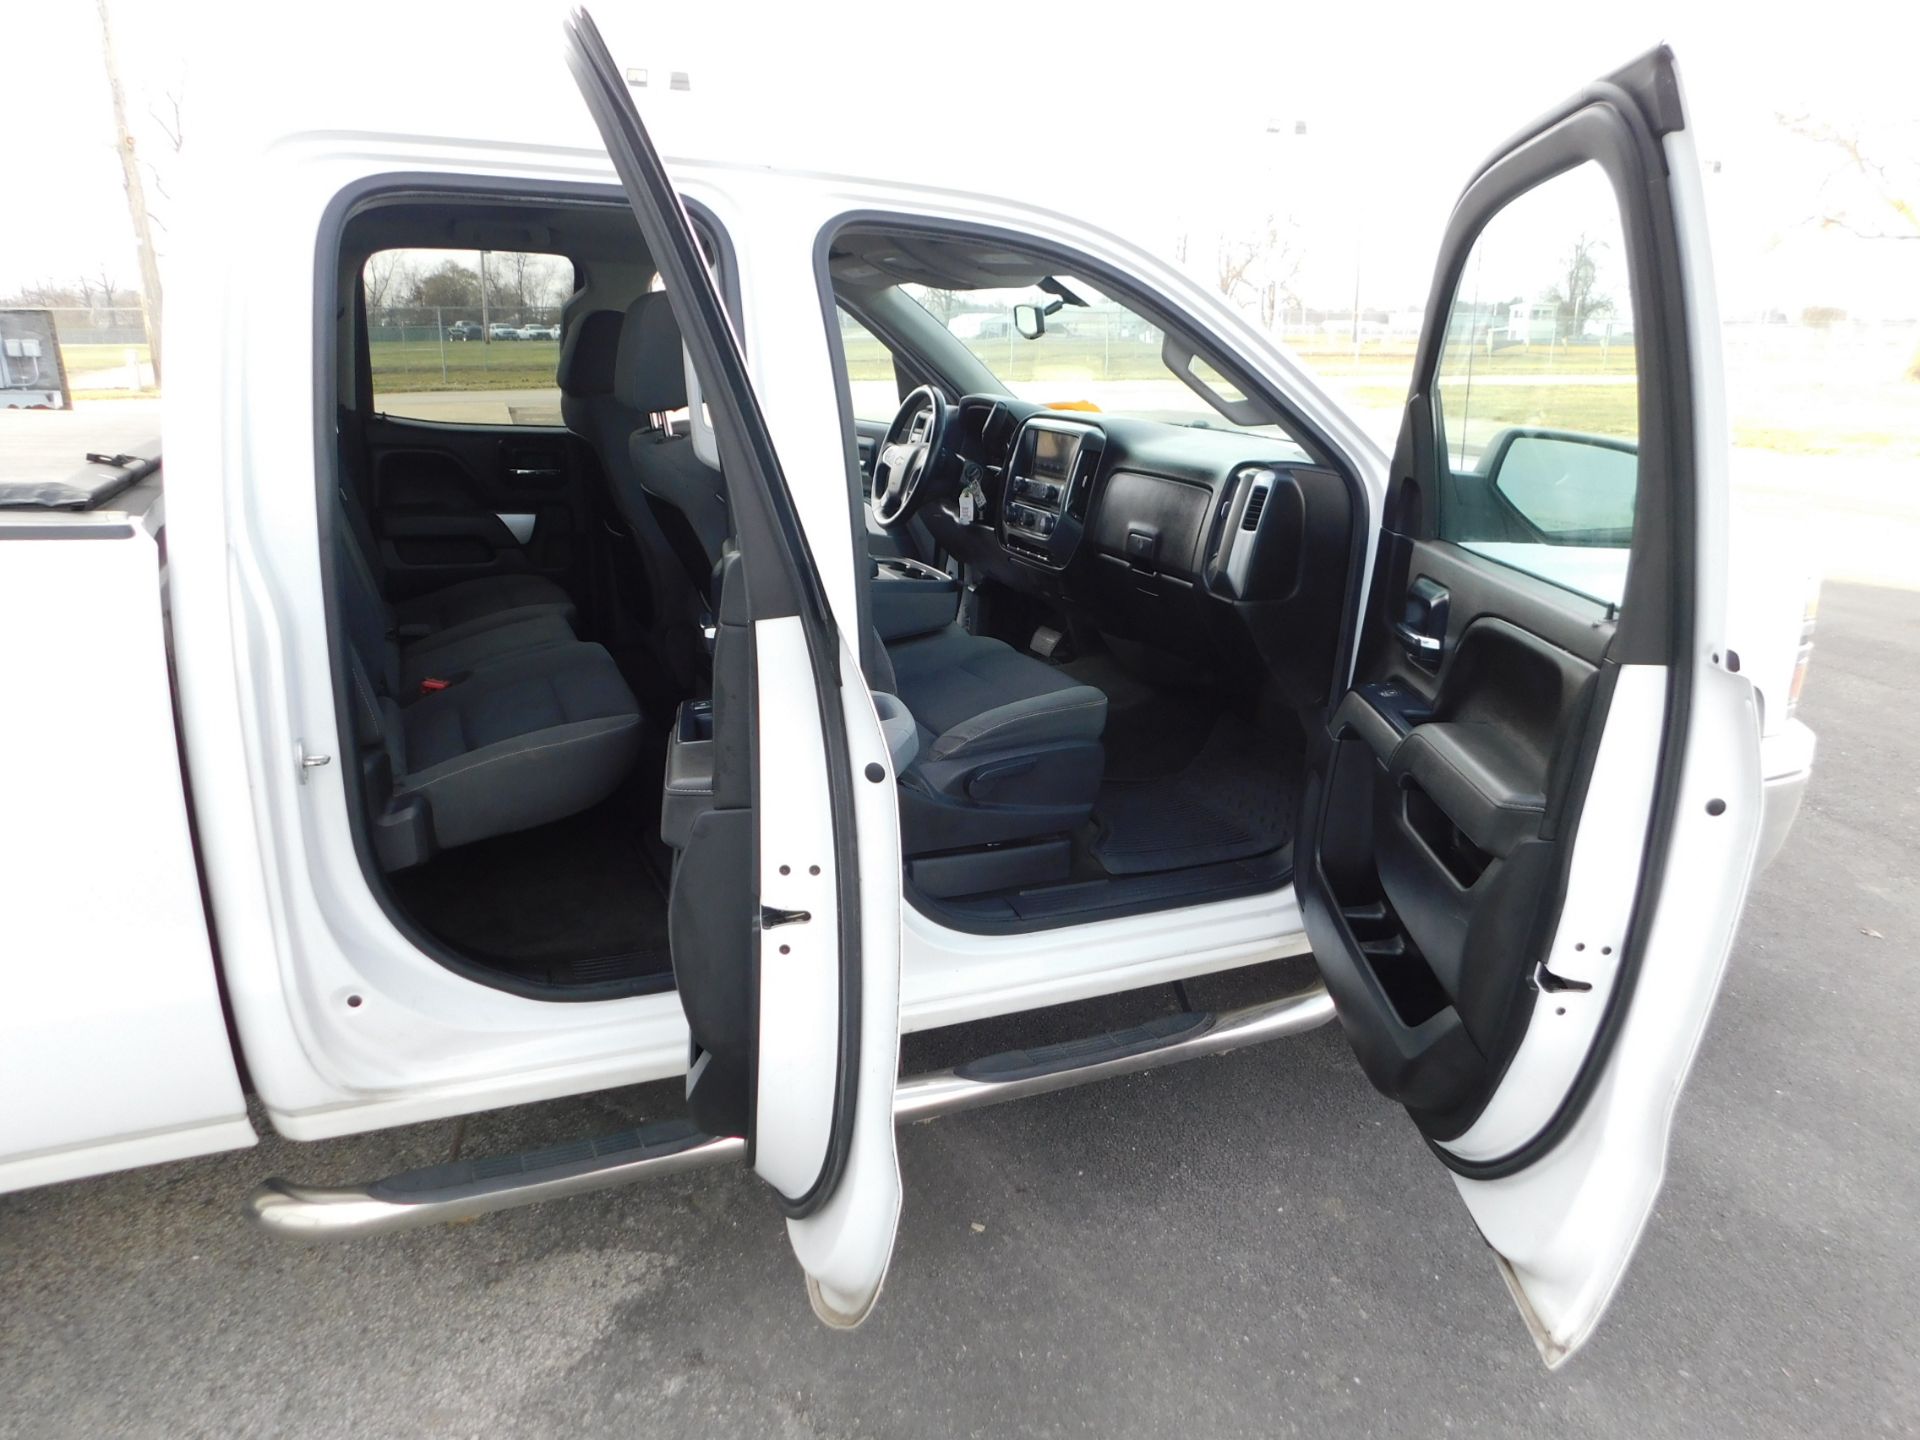 2014 Chevrolet Silverado LT Pickup, VIN 1GCVKREC3EZ139405, 4-Door 4 WD, Automatic, AM/FM, AC, Cruise - Image 36 of 51